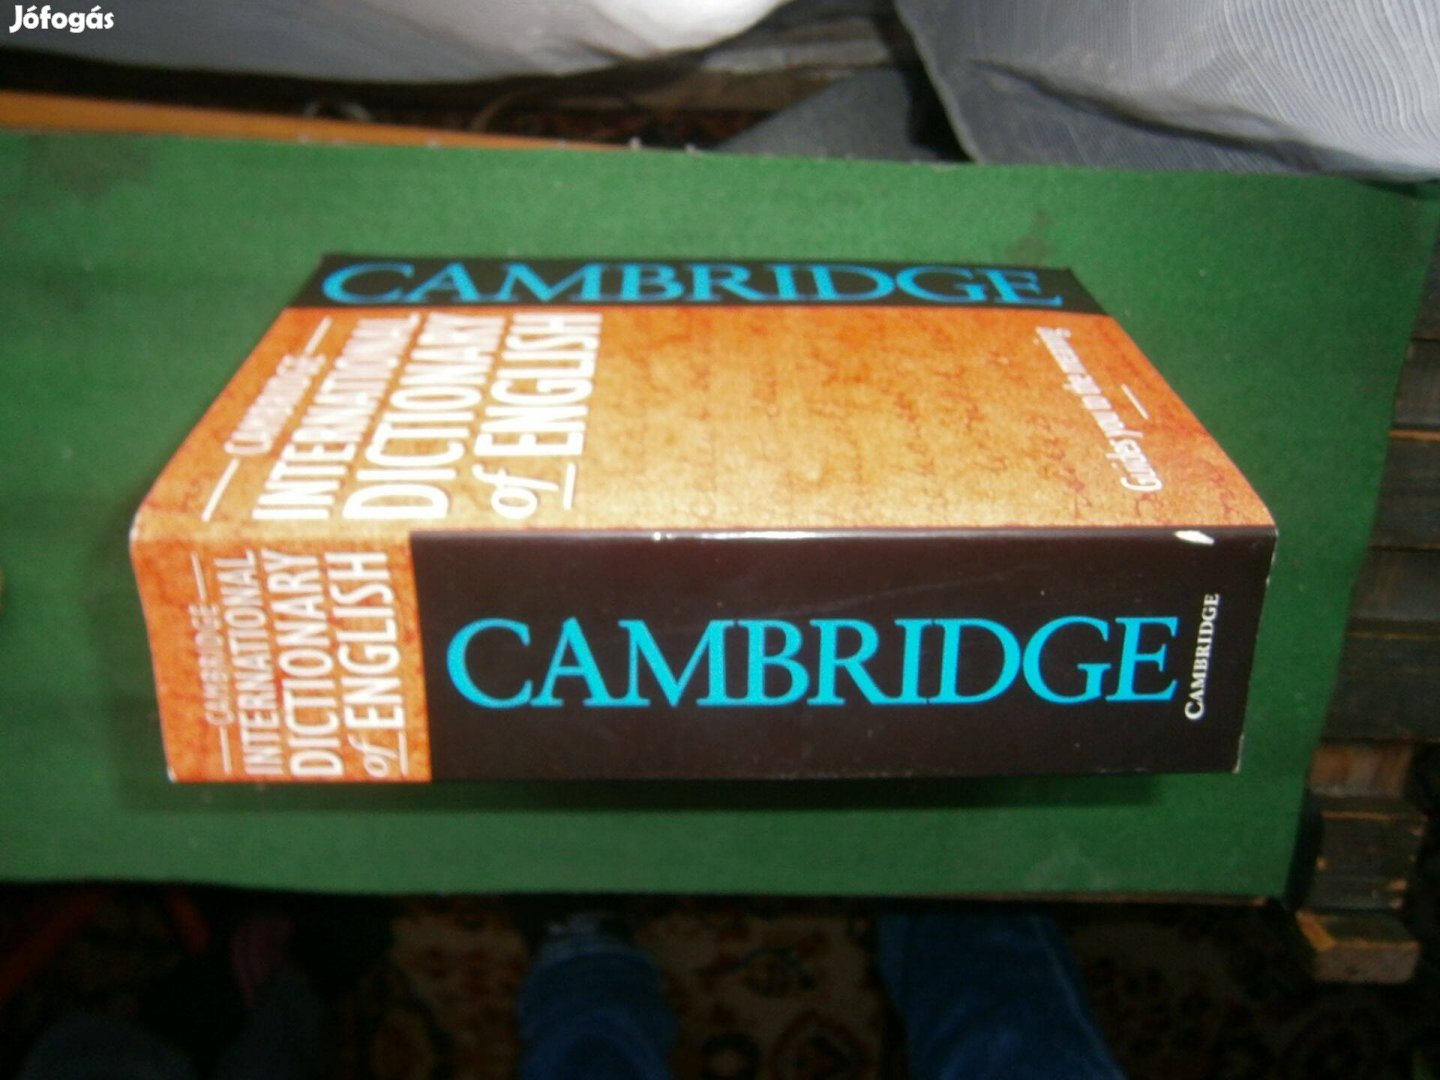 Eladó Cambridge Internatuional dictionary of English